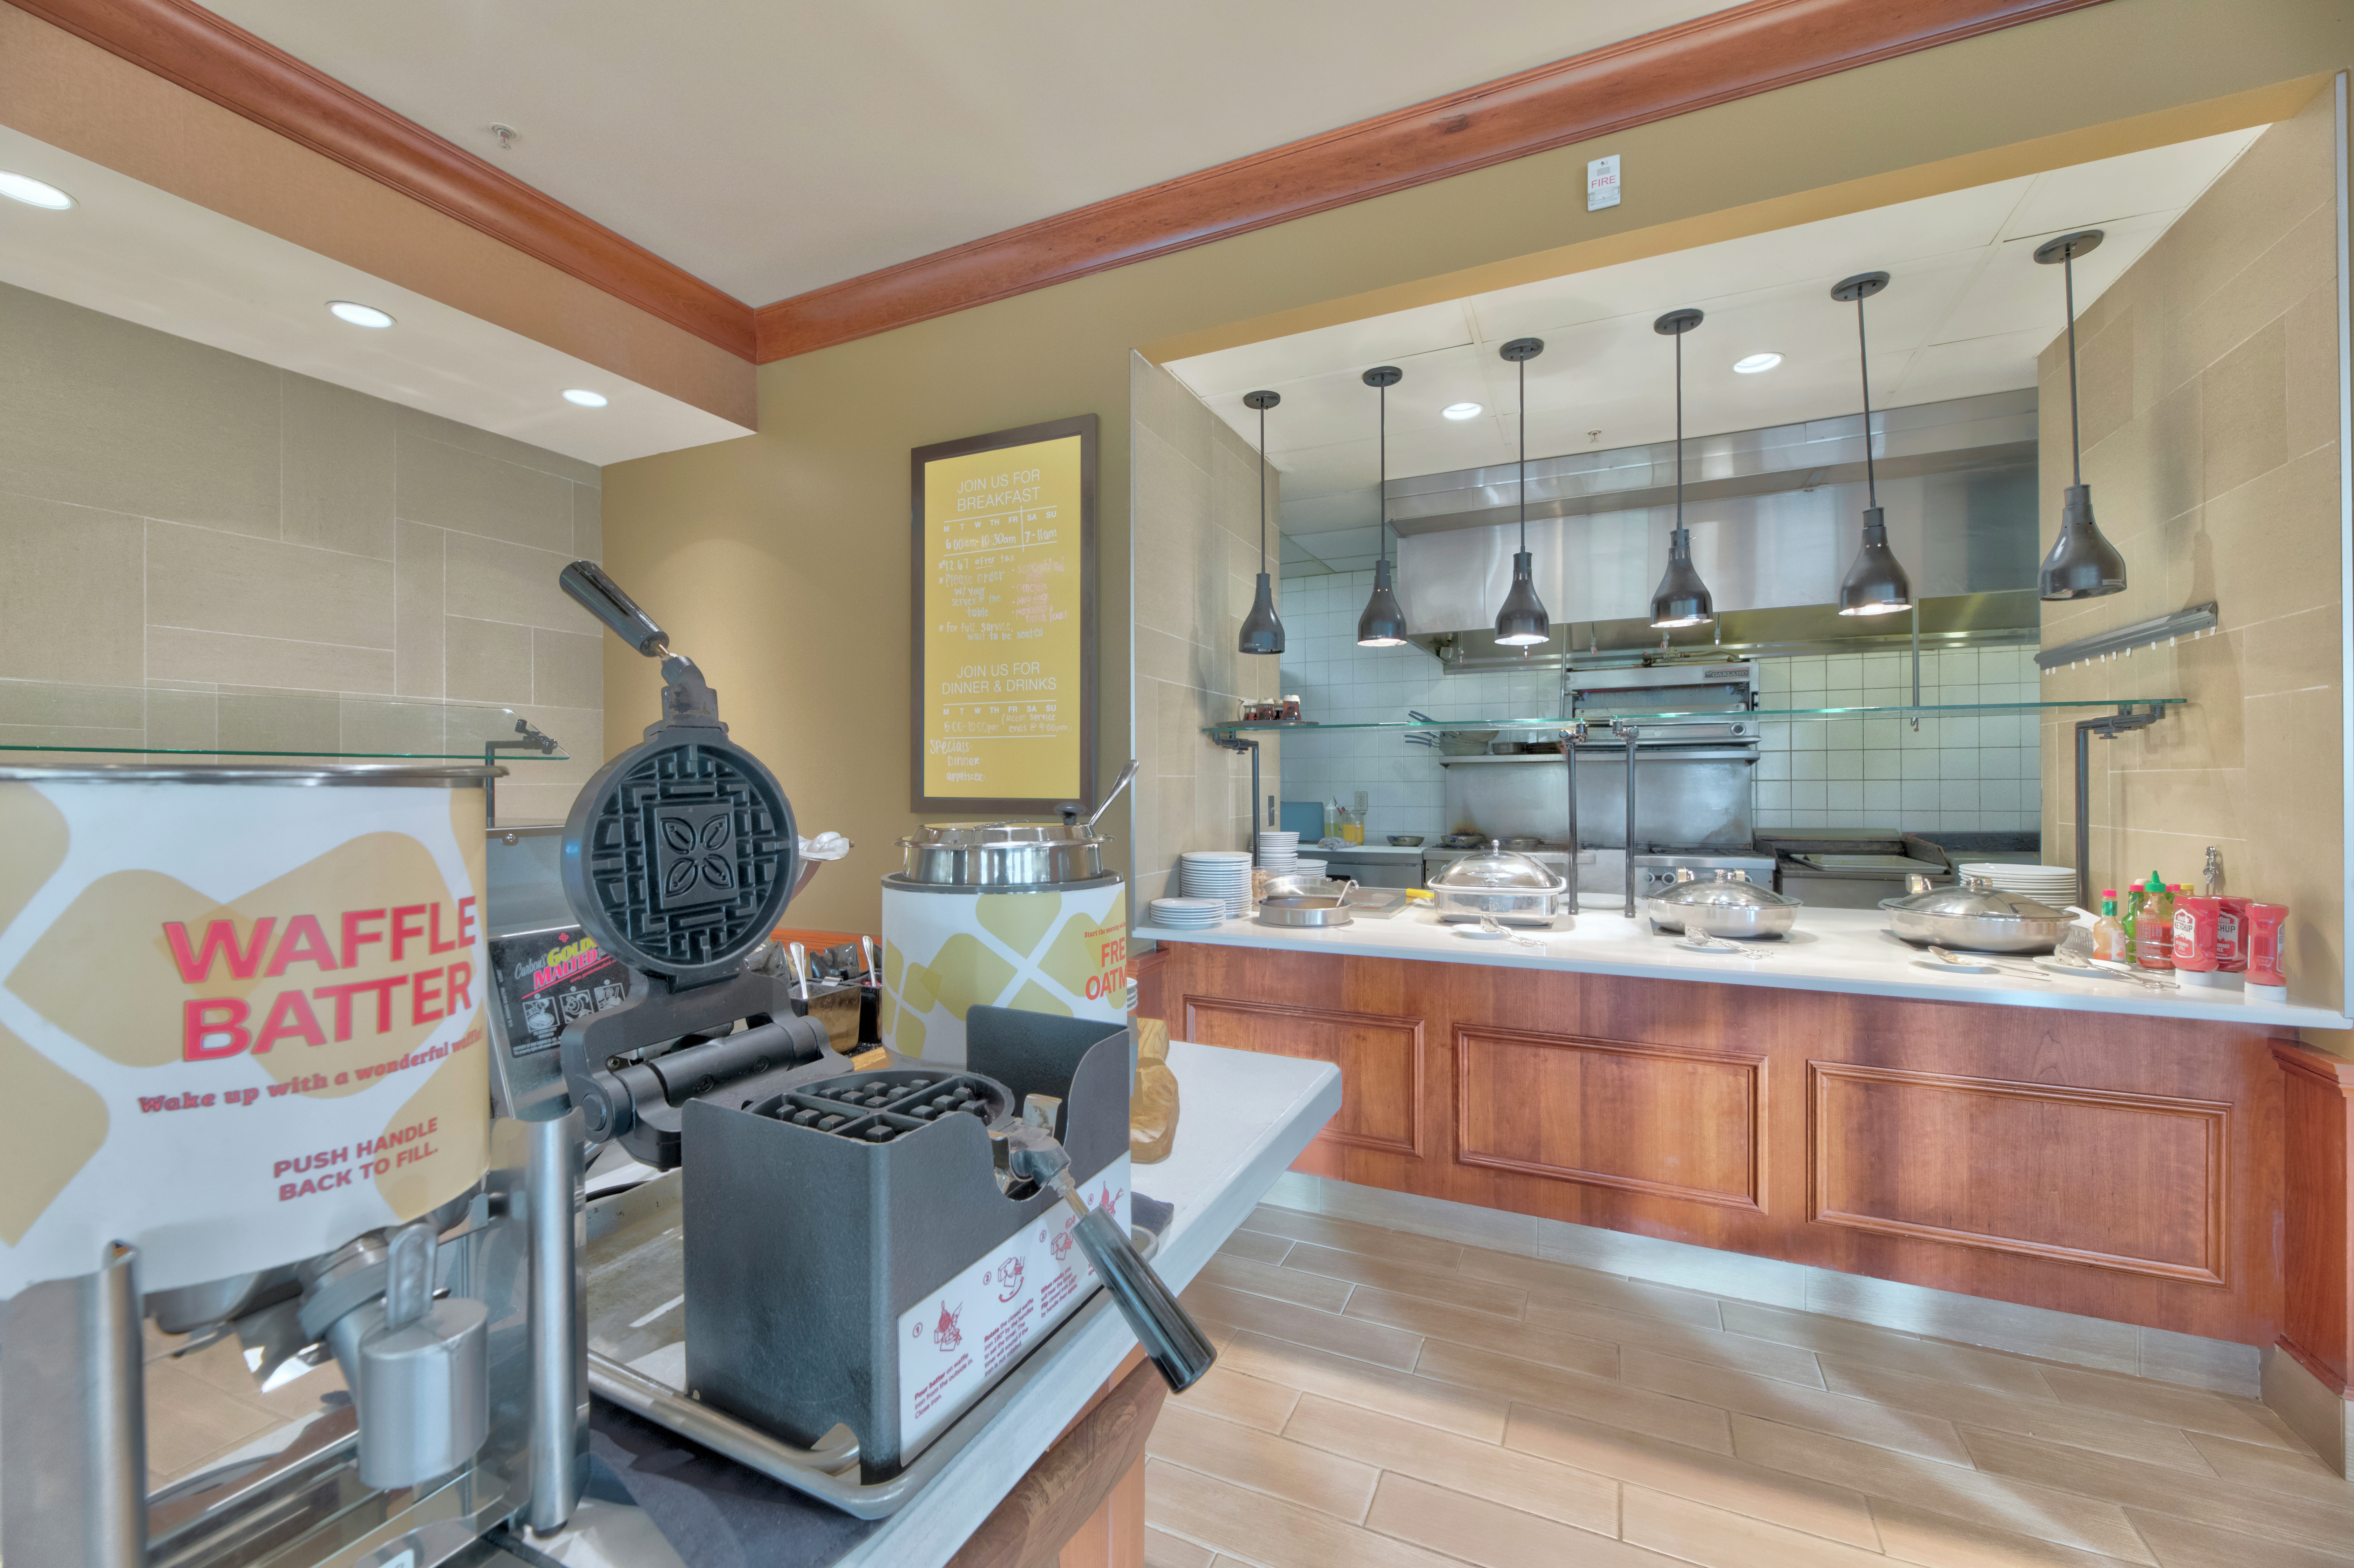 Full service breakfast buffet includes DIY waffle station